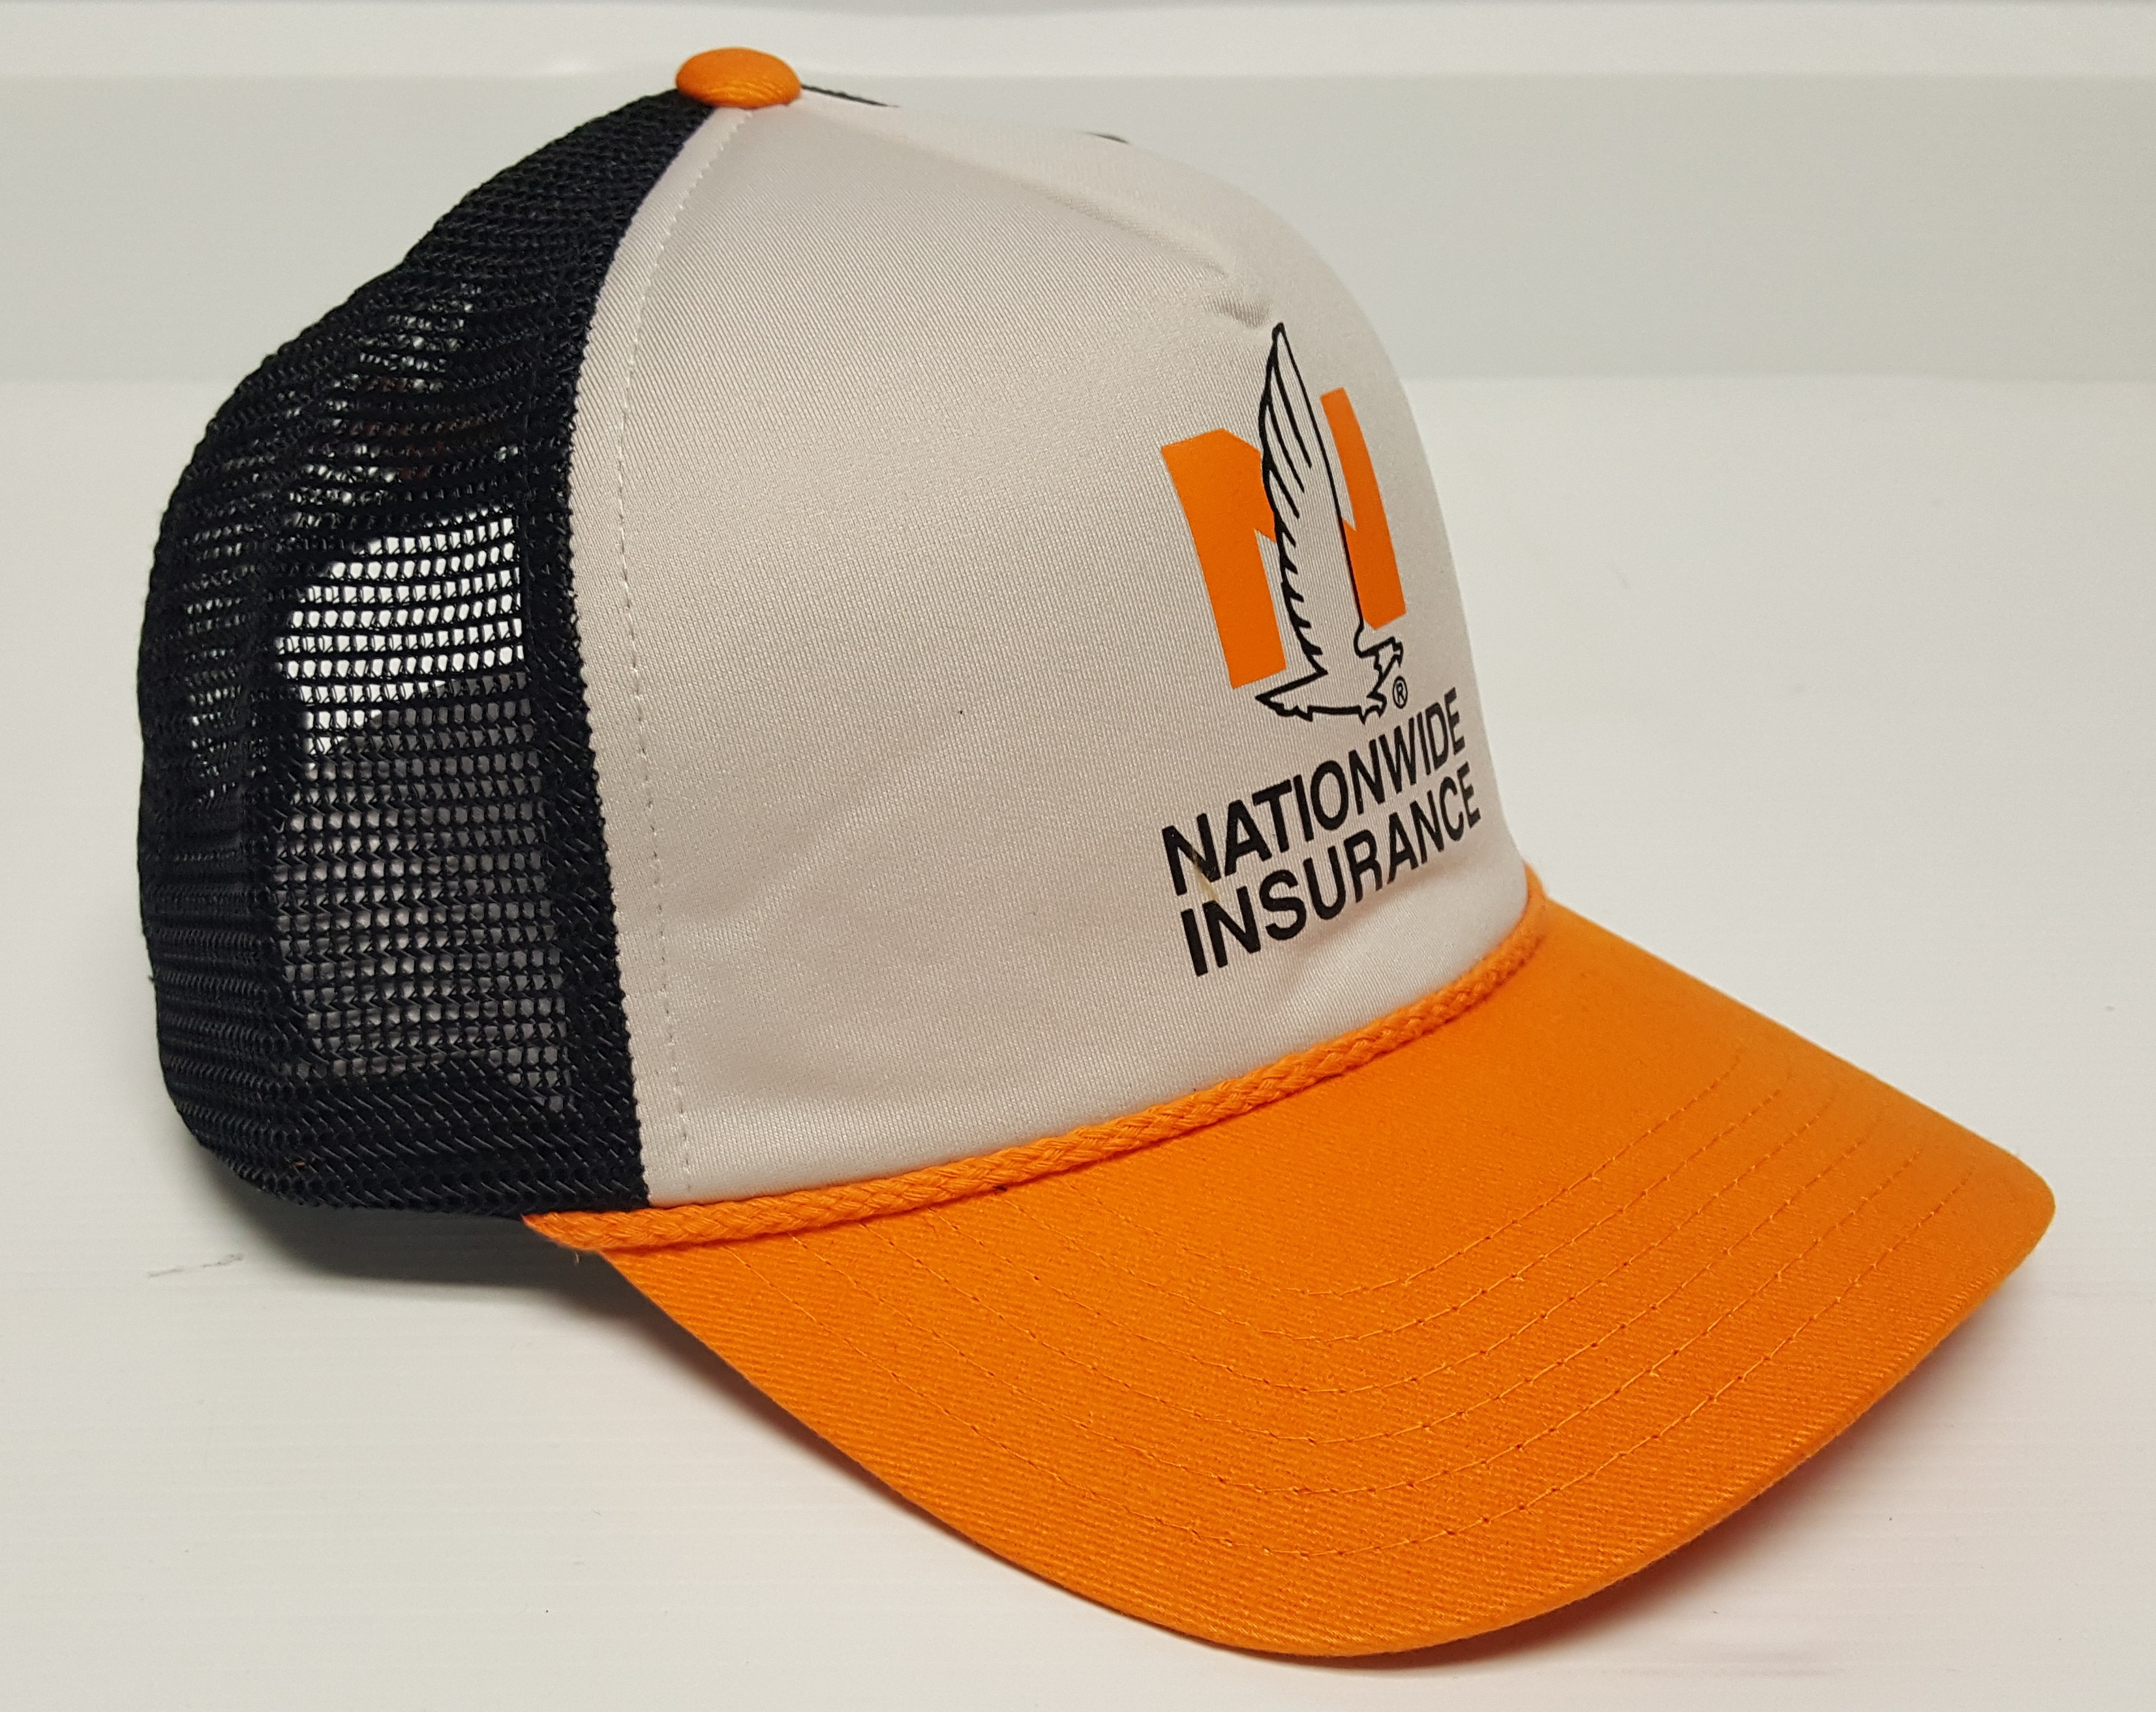 2016 Dale Earnhardt Jr Nationwide Insurance "Darlington Throwback" mesh cap